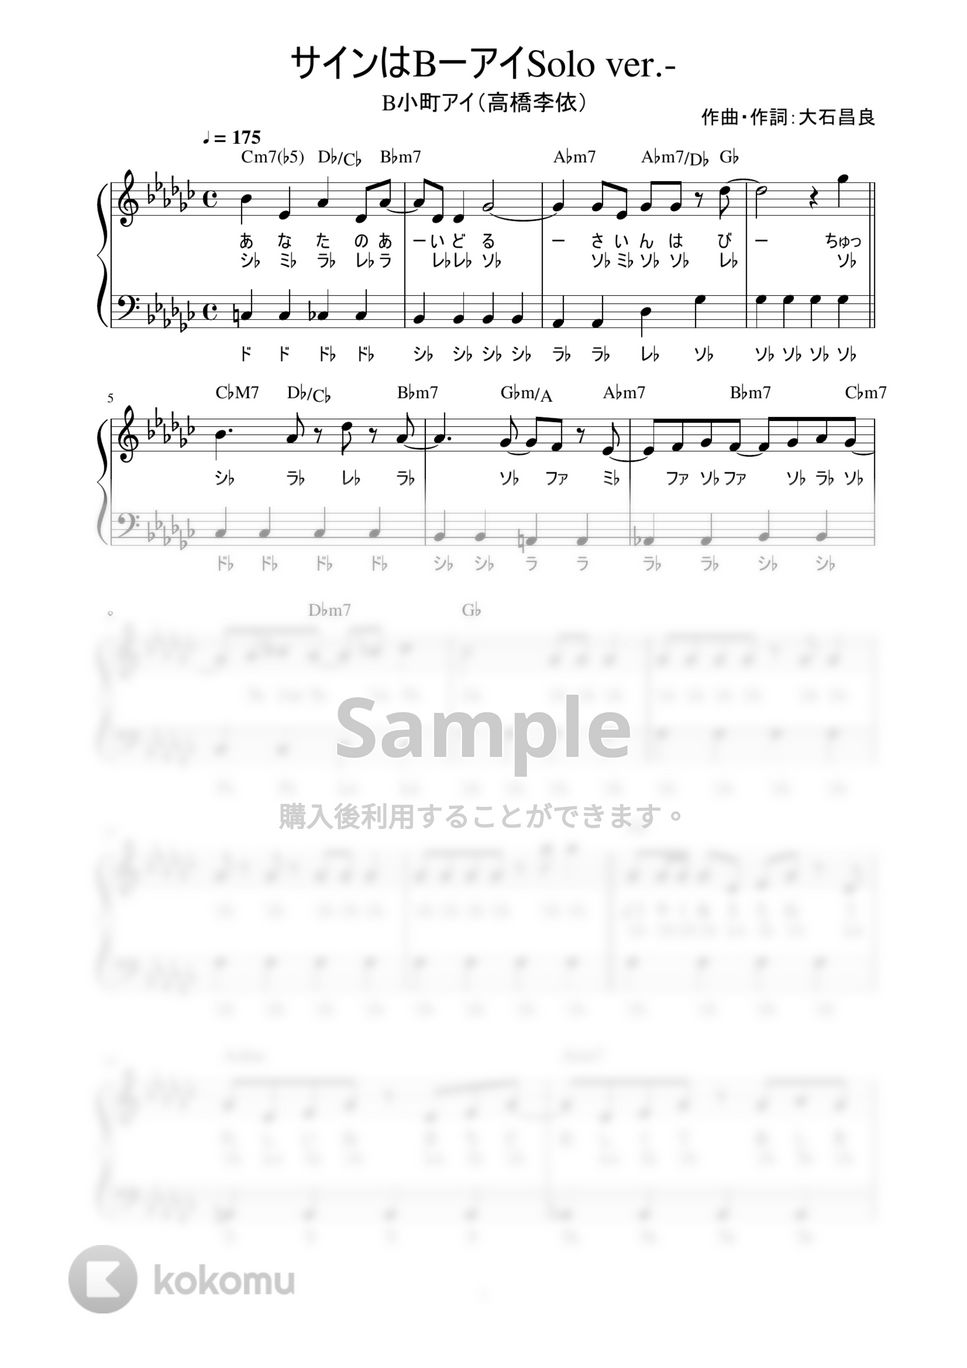 B小町アイ - サインはB (かんたん / 歌詞付き / ドレミ付き / 初心者) by piano.tokyo